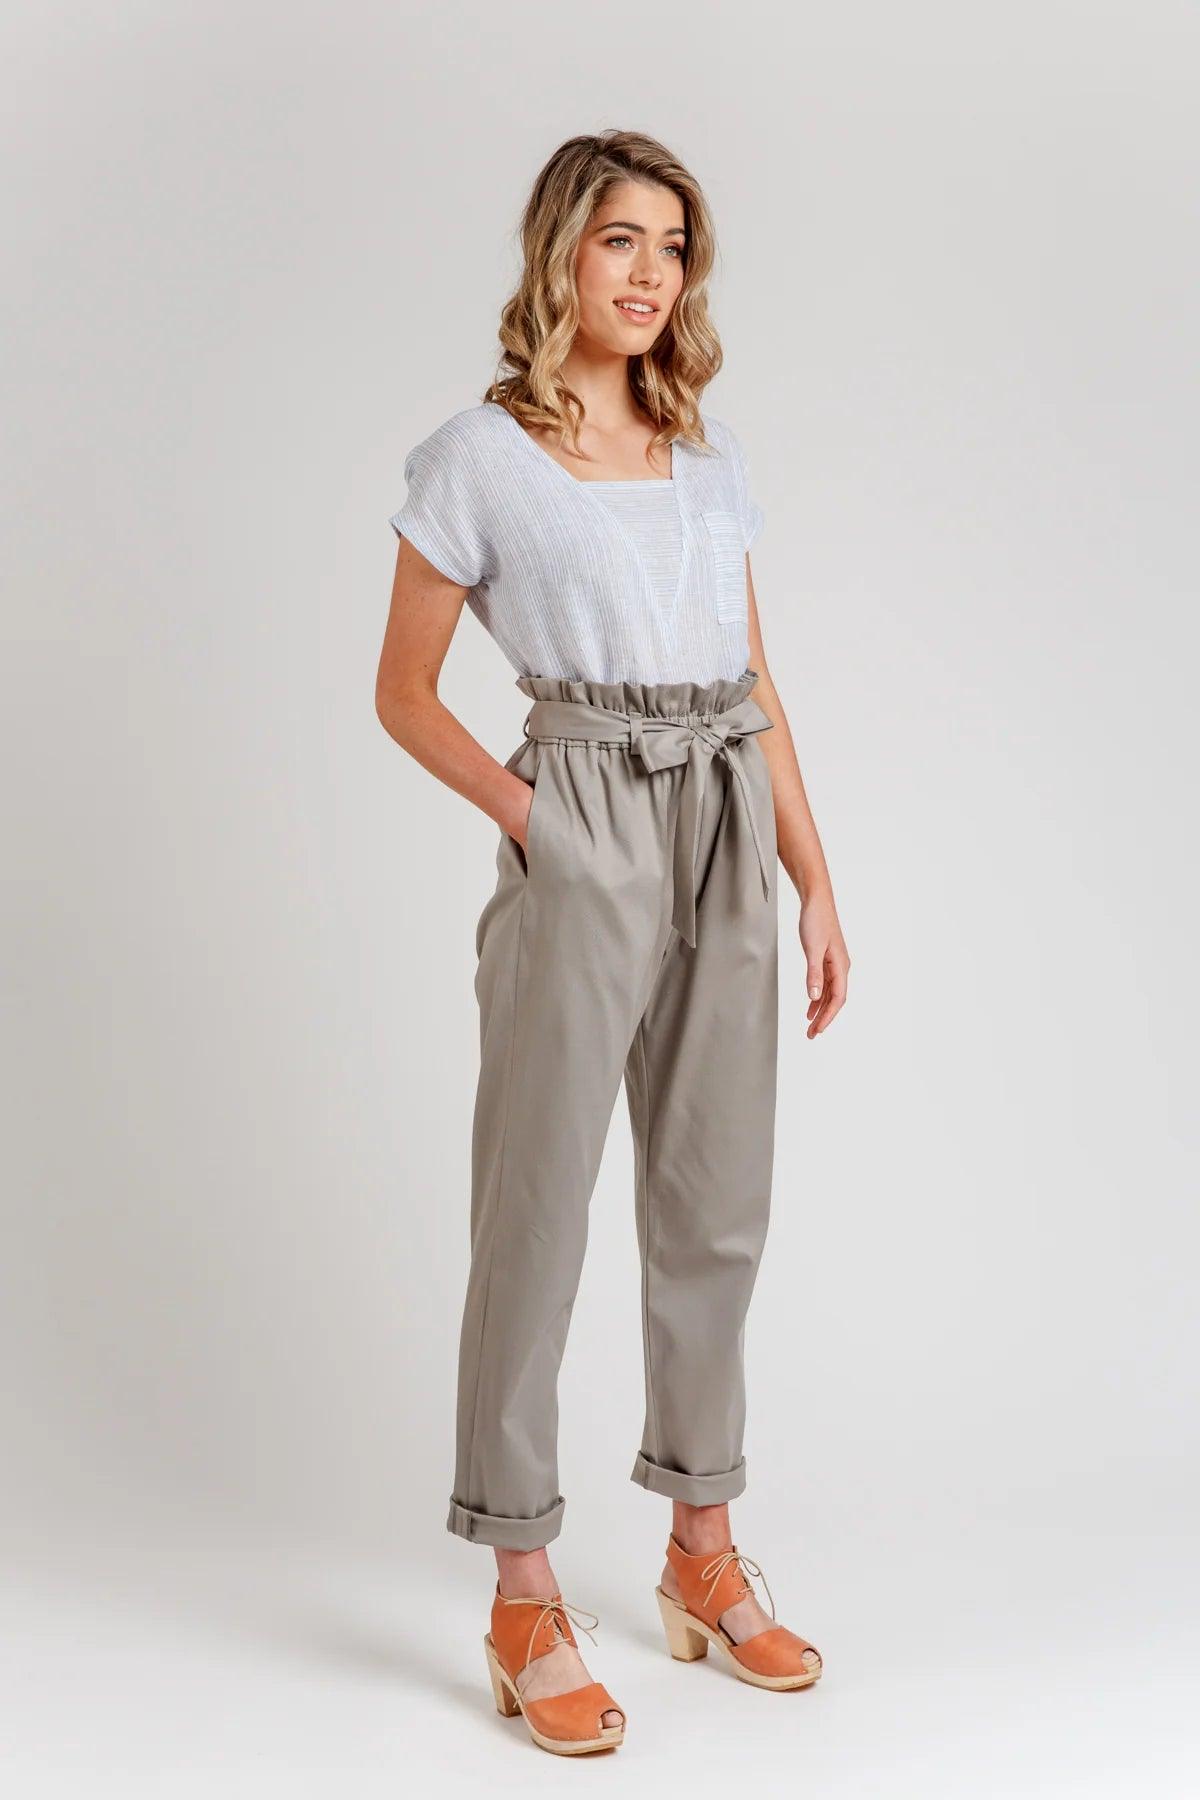 Megan Nielsen Opal Pants and Shorts Sizes 0 - 20